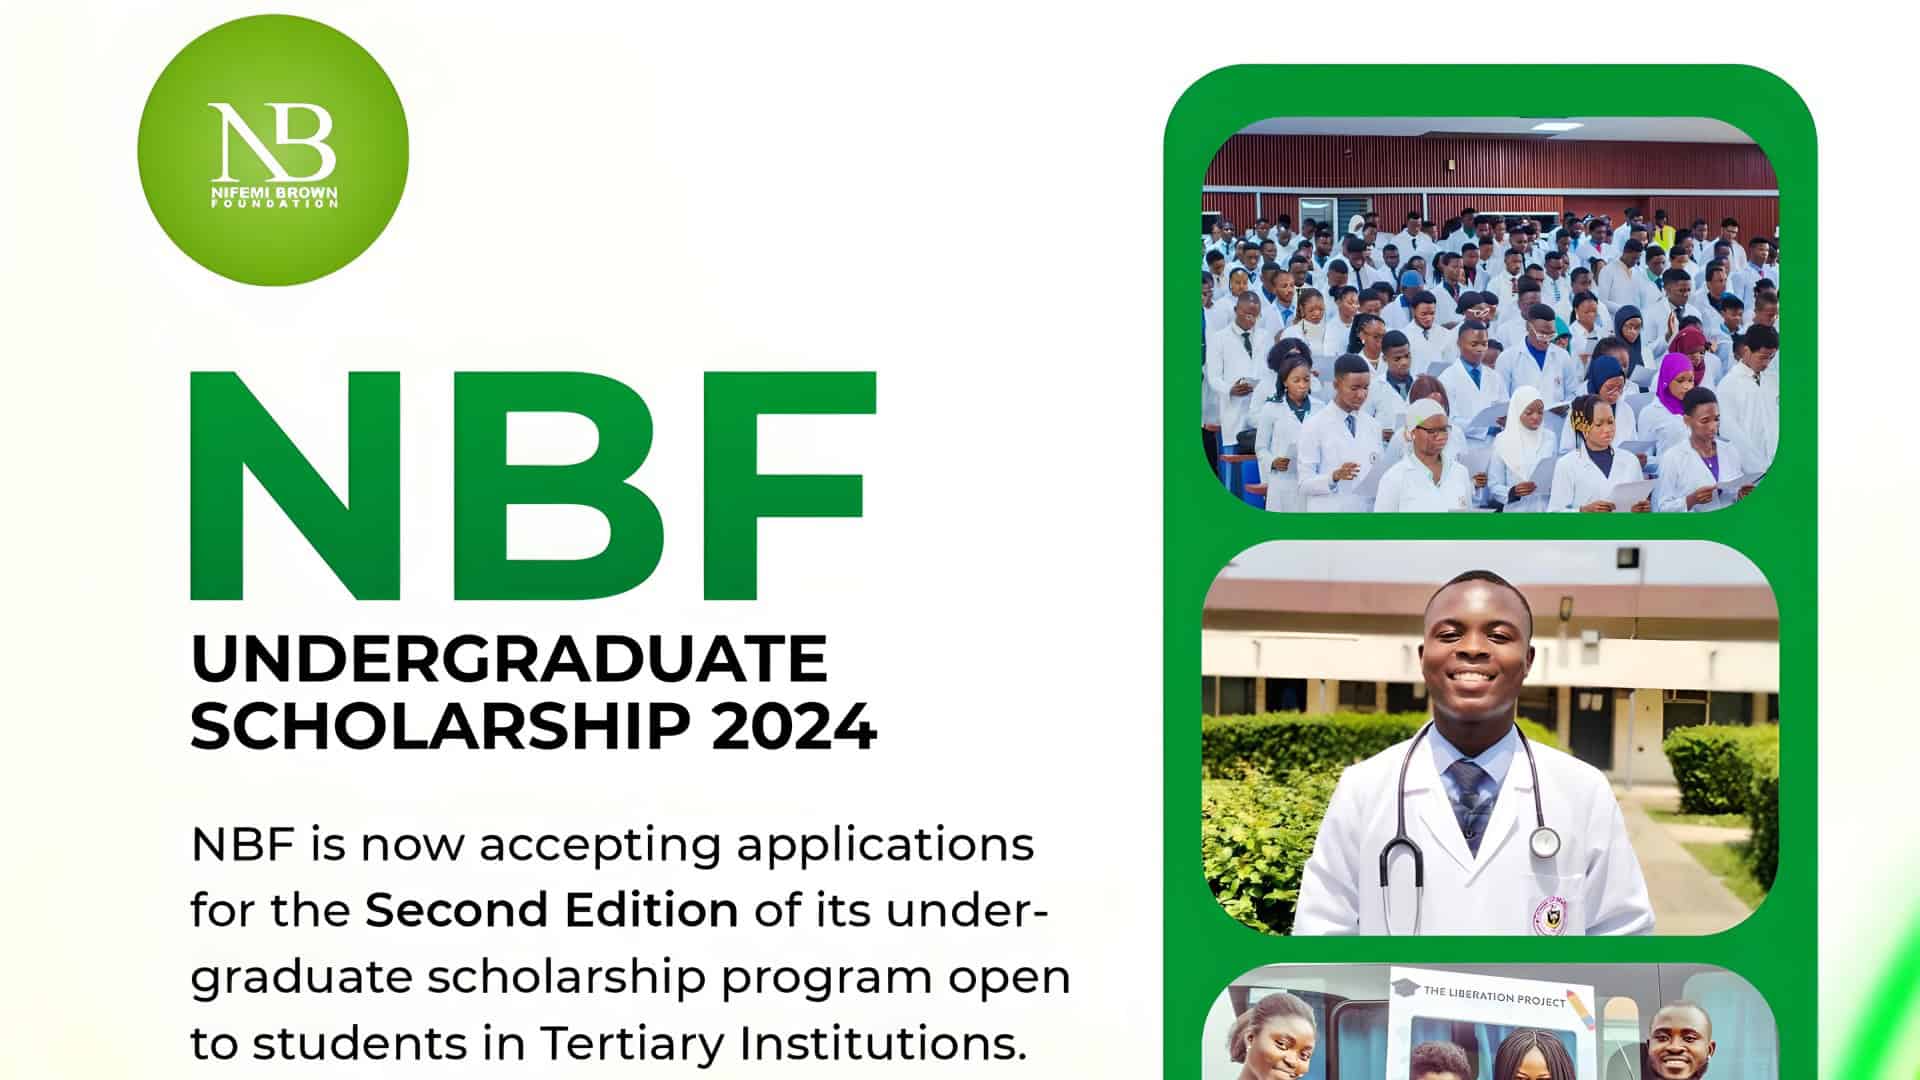 Nifemi Brown Foundation Undergraduate Scholarship